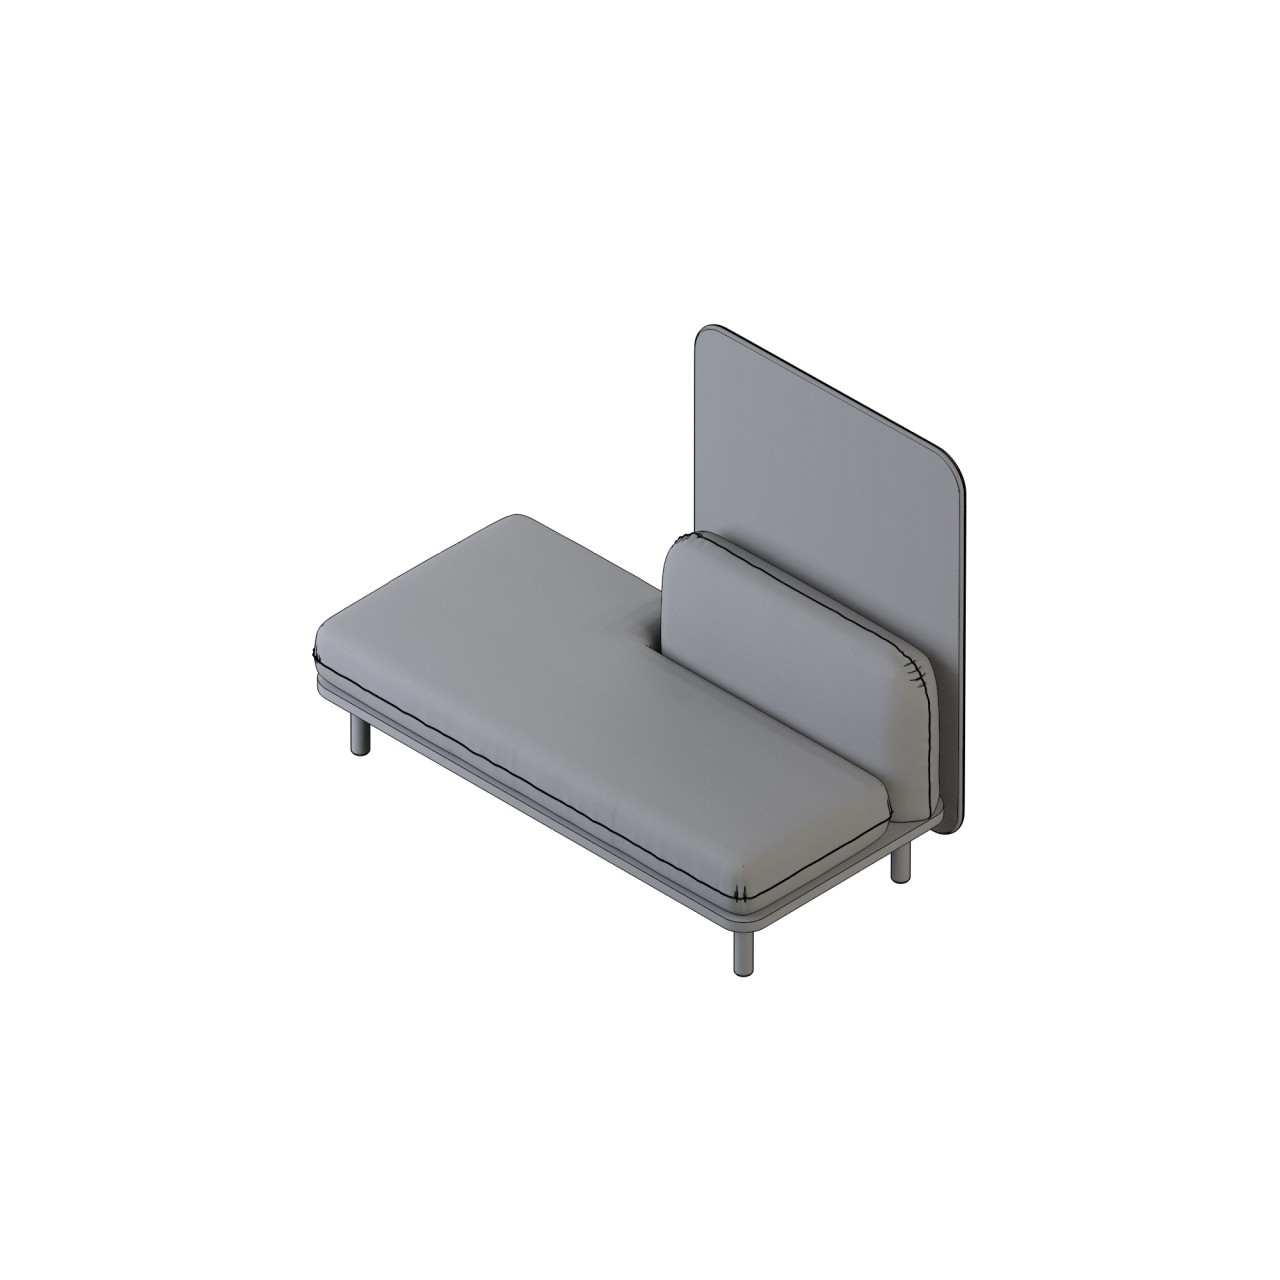 Soft - 24011L-B
left back bench
privacy
COM 10.5
back 1.5, base 2,
seat 4, panel 3